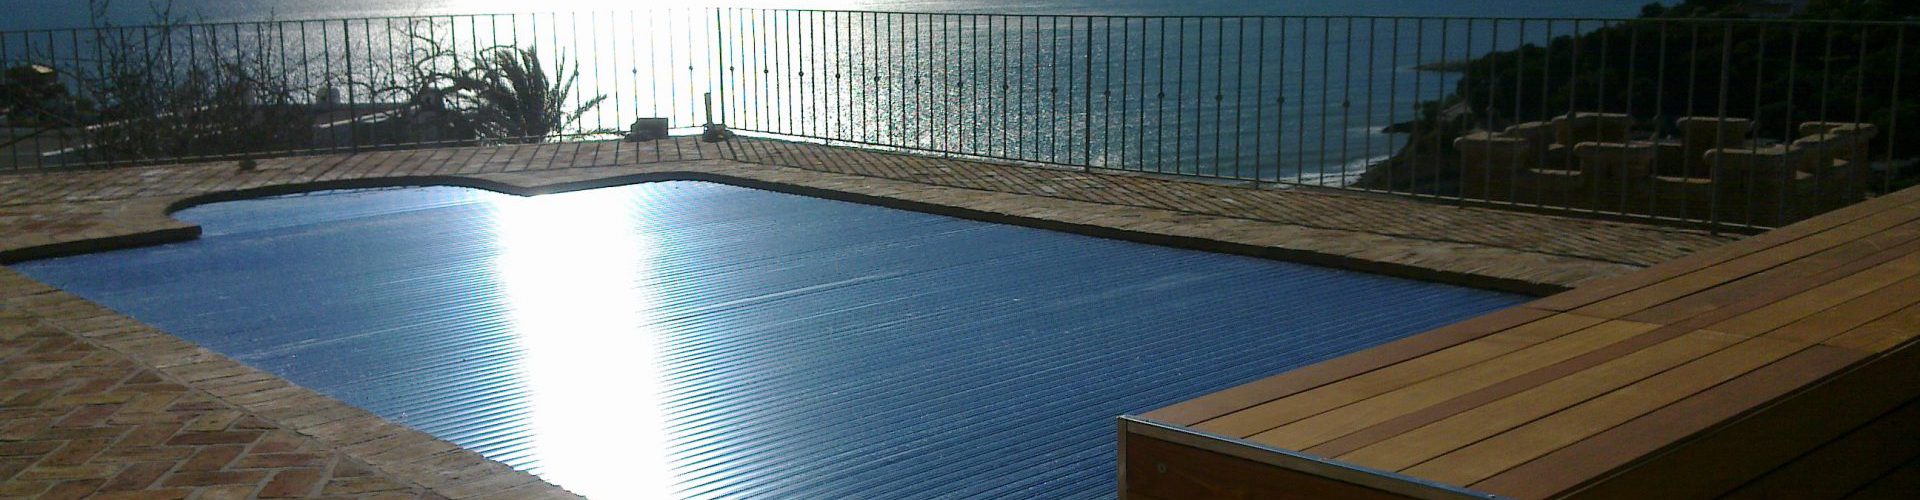 La cubierta de piscina adequada para cada temporada!